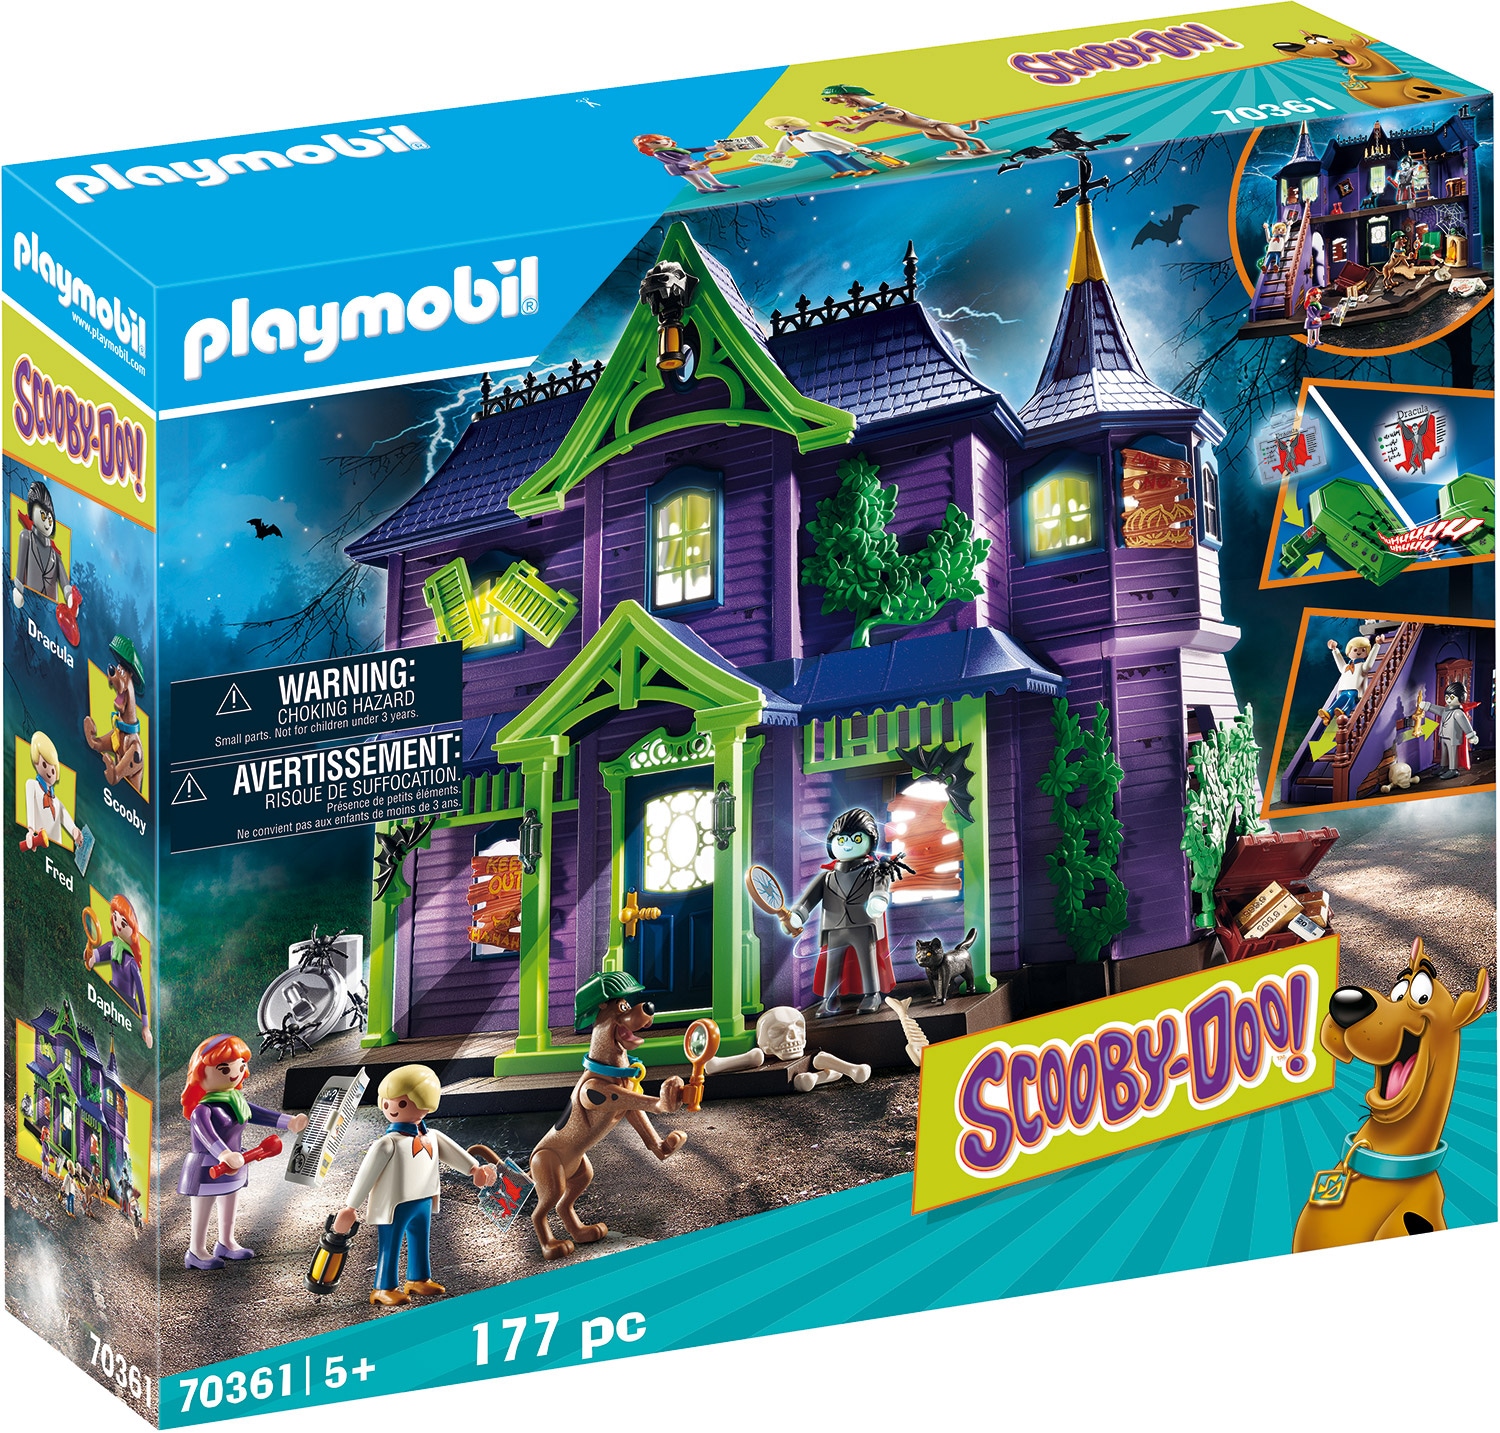 Image of Playmobil® Konstruktions-Spielset »Abenteuer im Geisterhaus (70361), SCOOBY-DOO!«, (177 St.), Made in Germany bei Ackermann Versand Schweiz